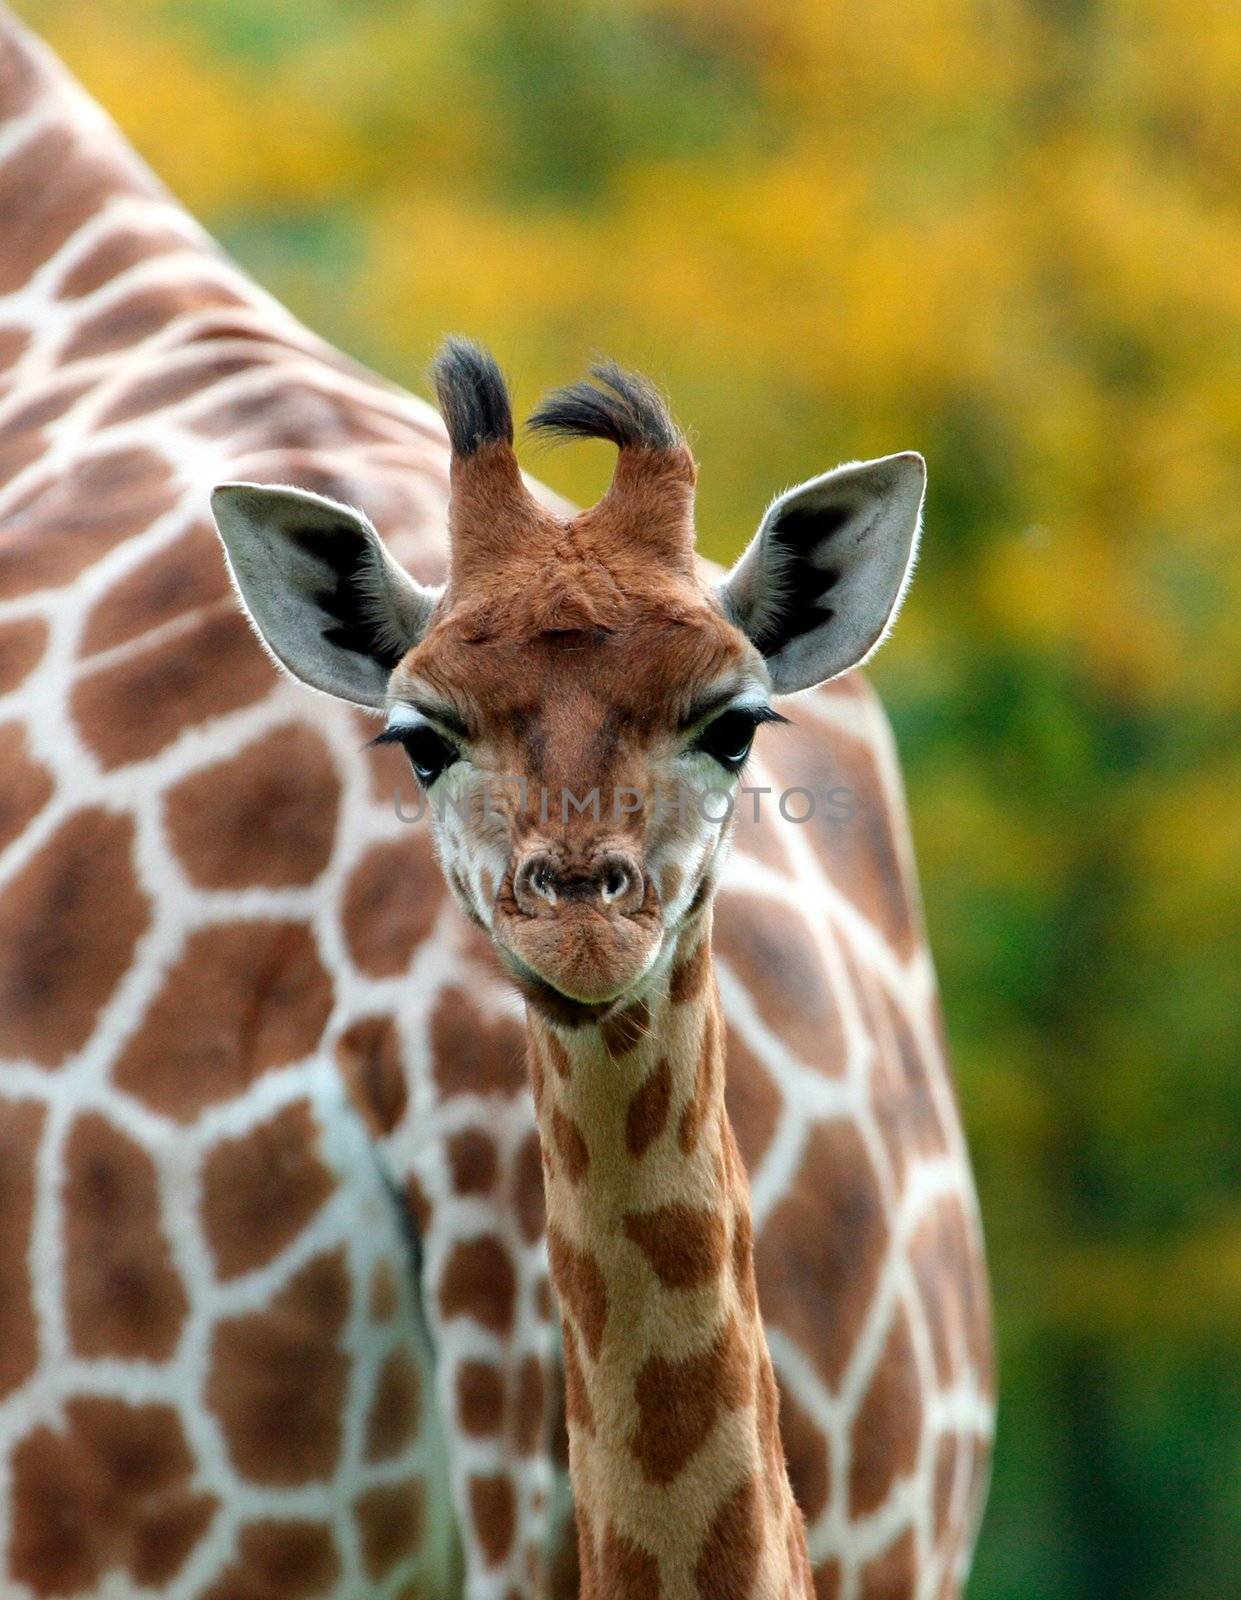 Cute baby Giraffe by speedfighter